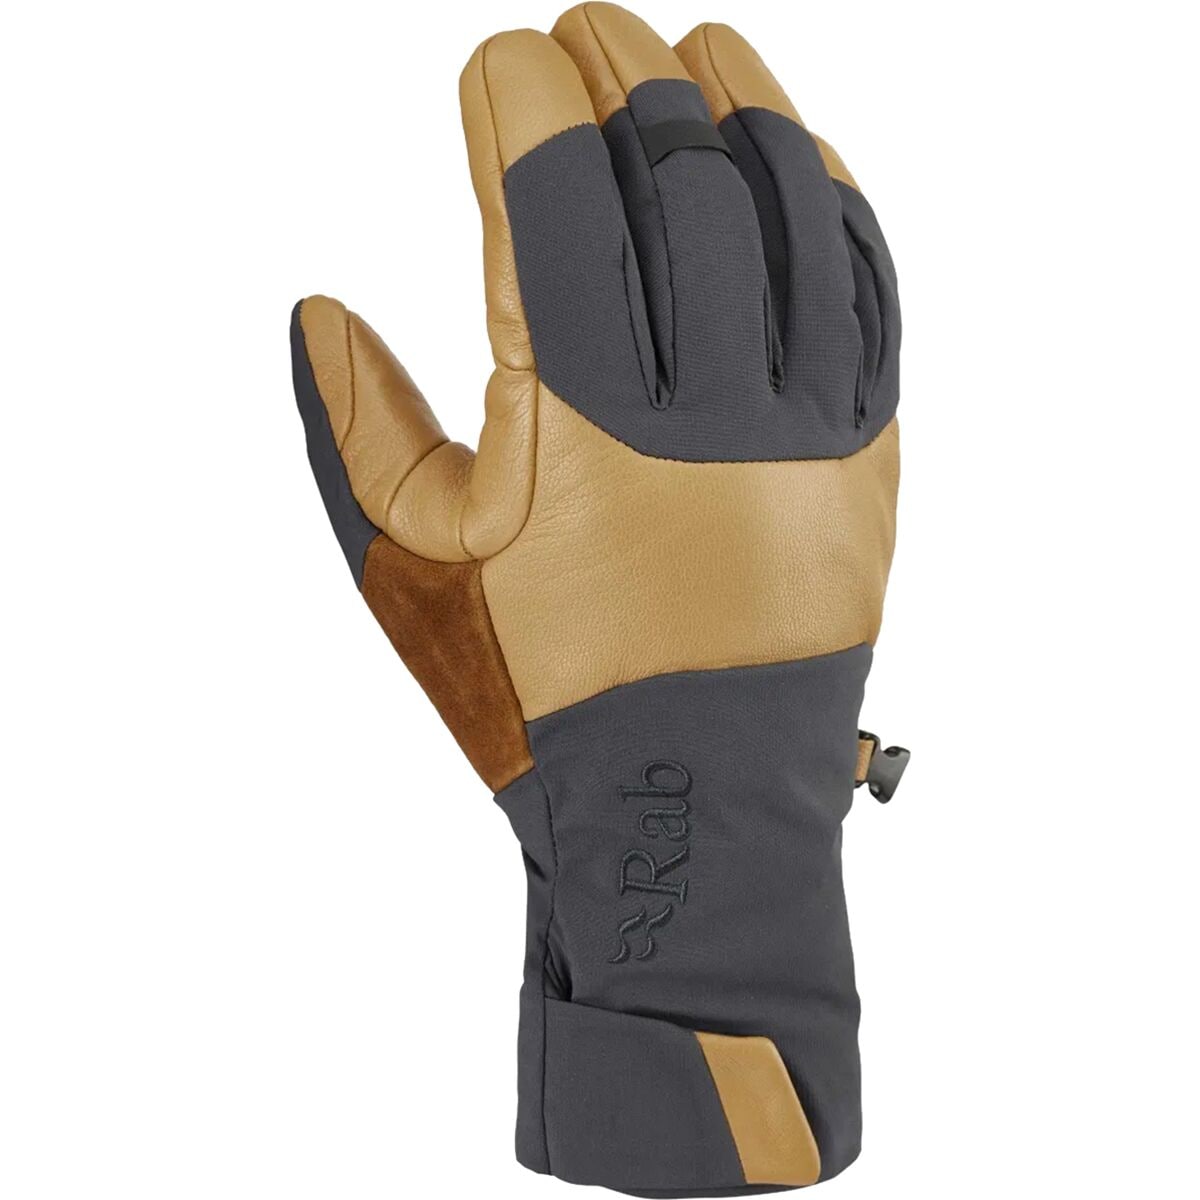 Rab Guide Lite GTX Glove - Men's